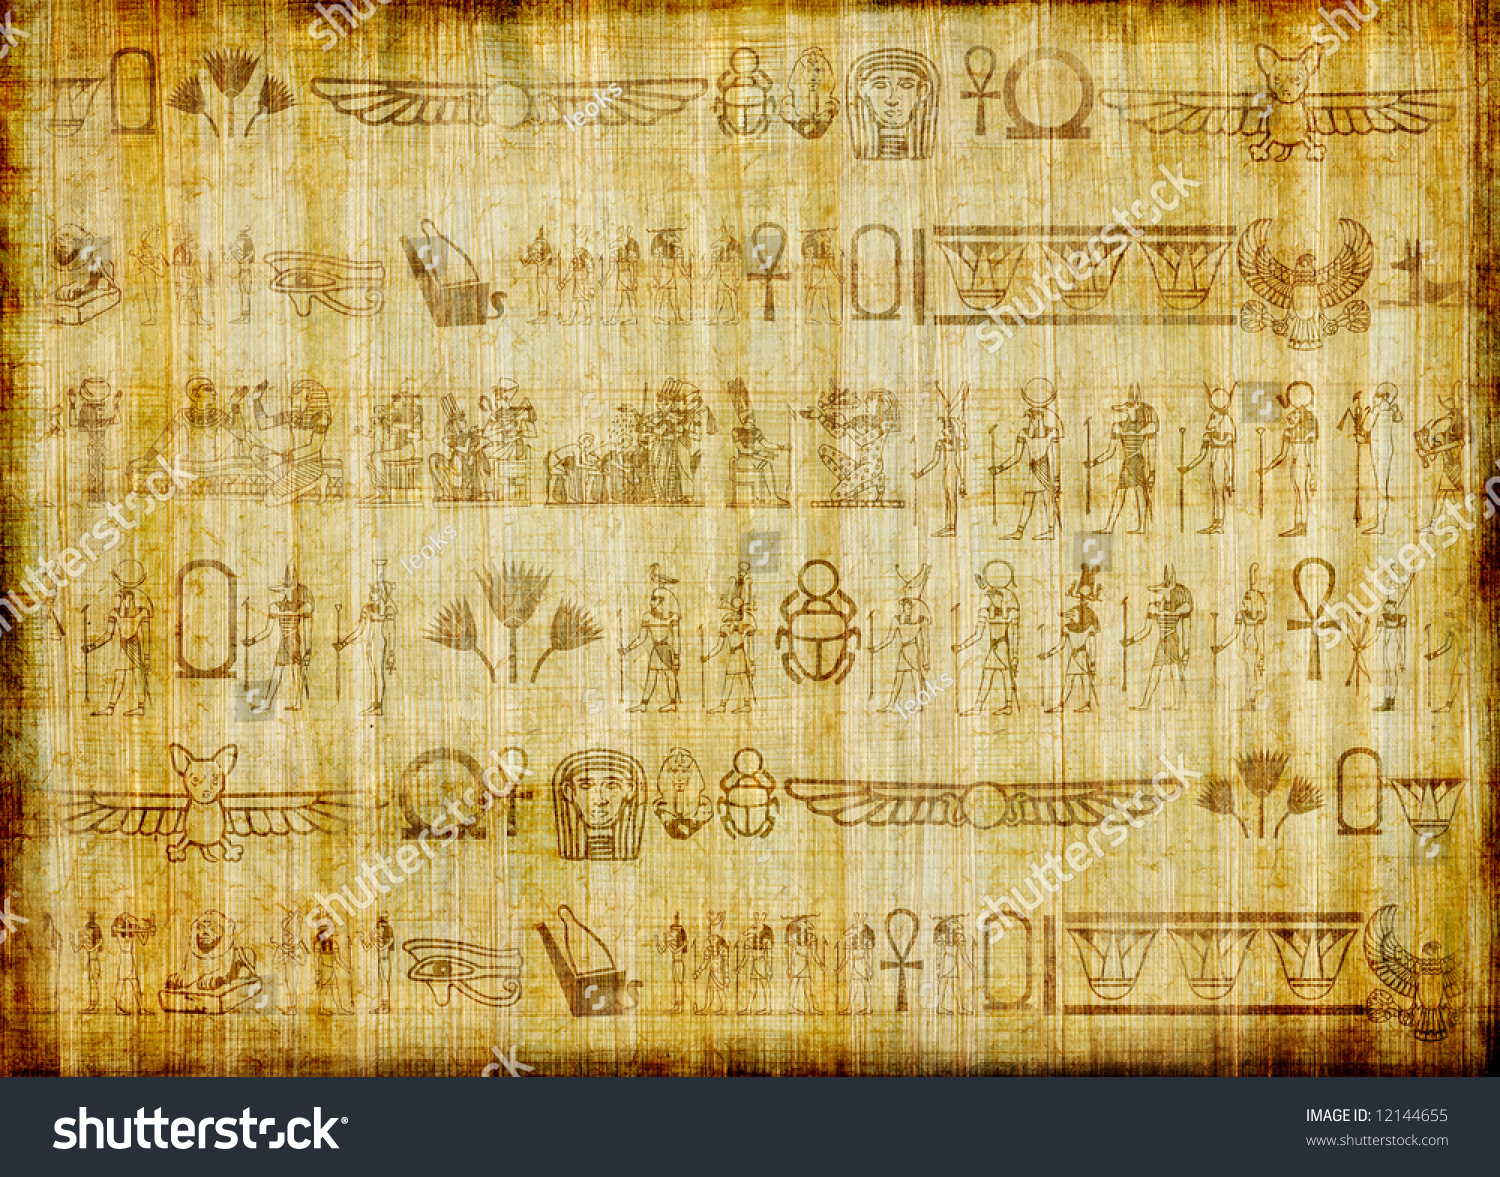 Фон Папирус с буквами